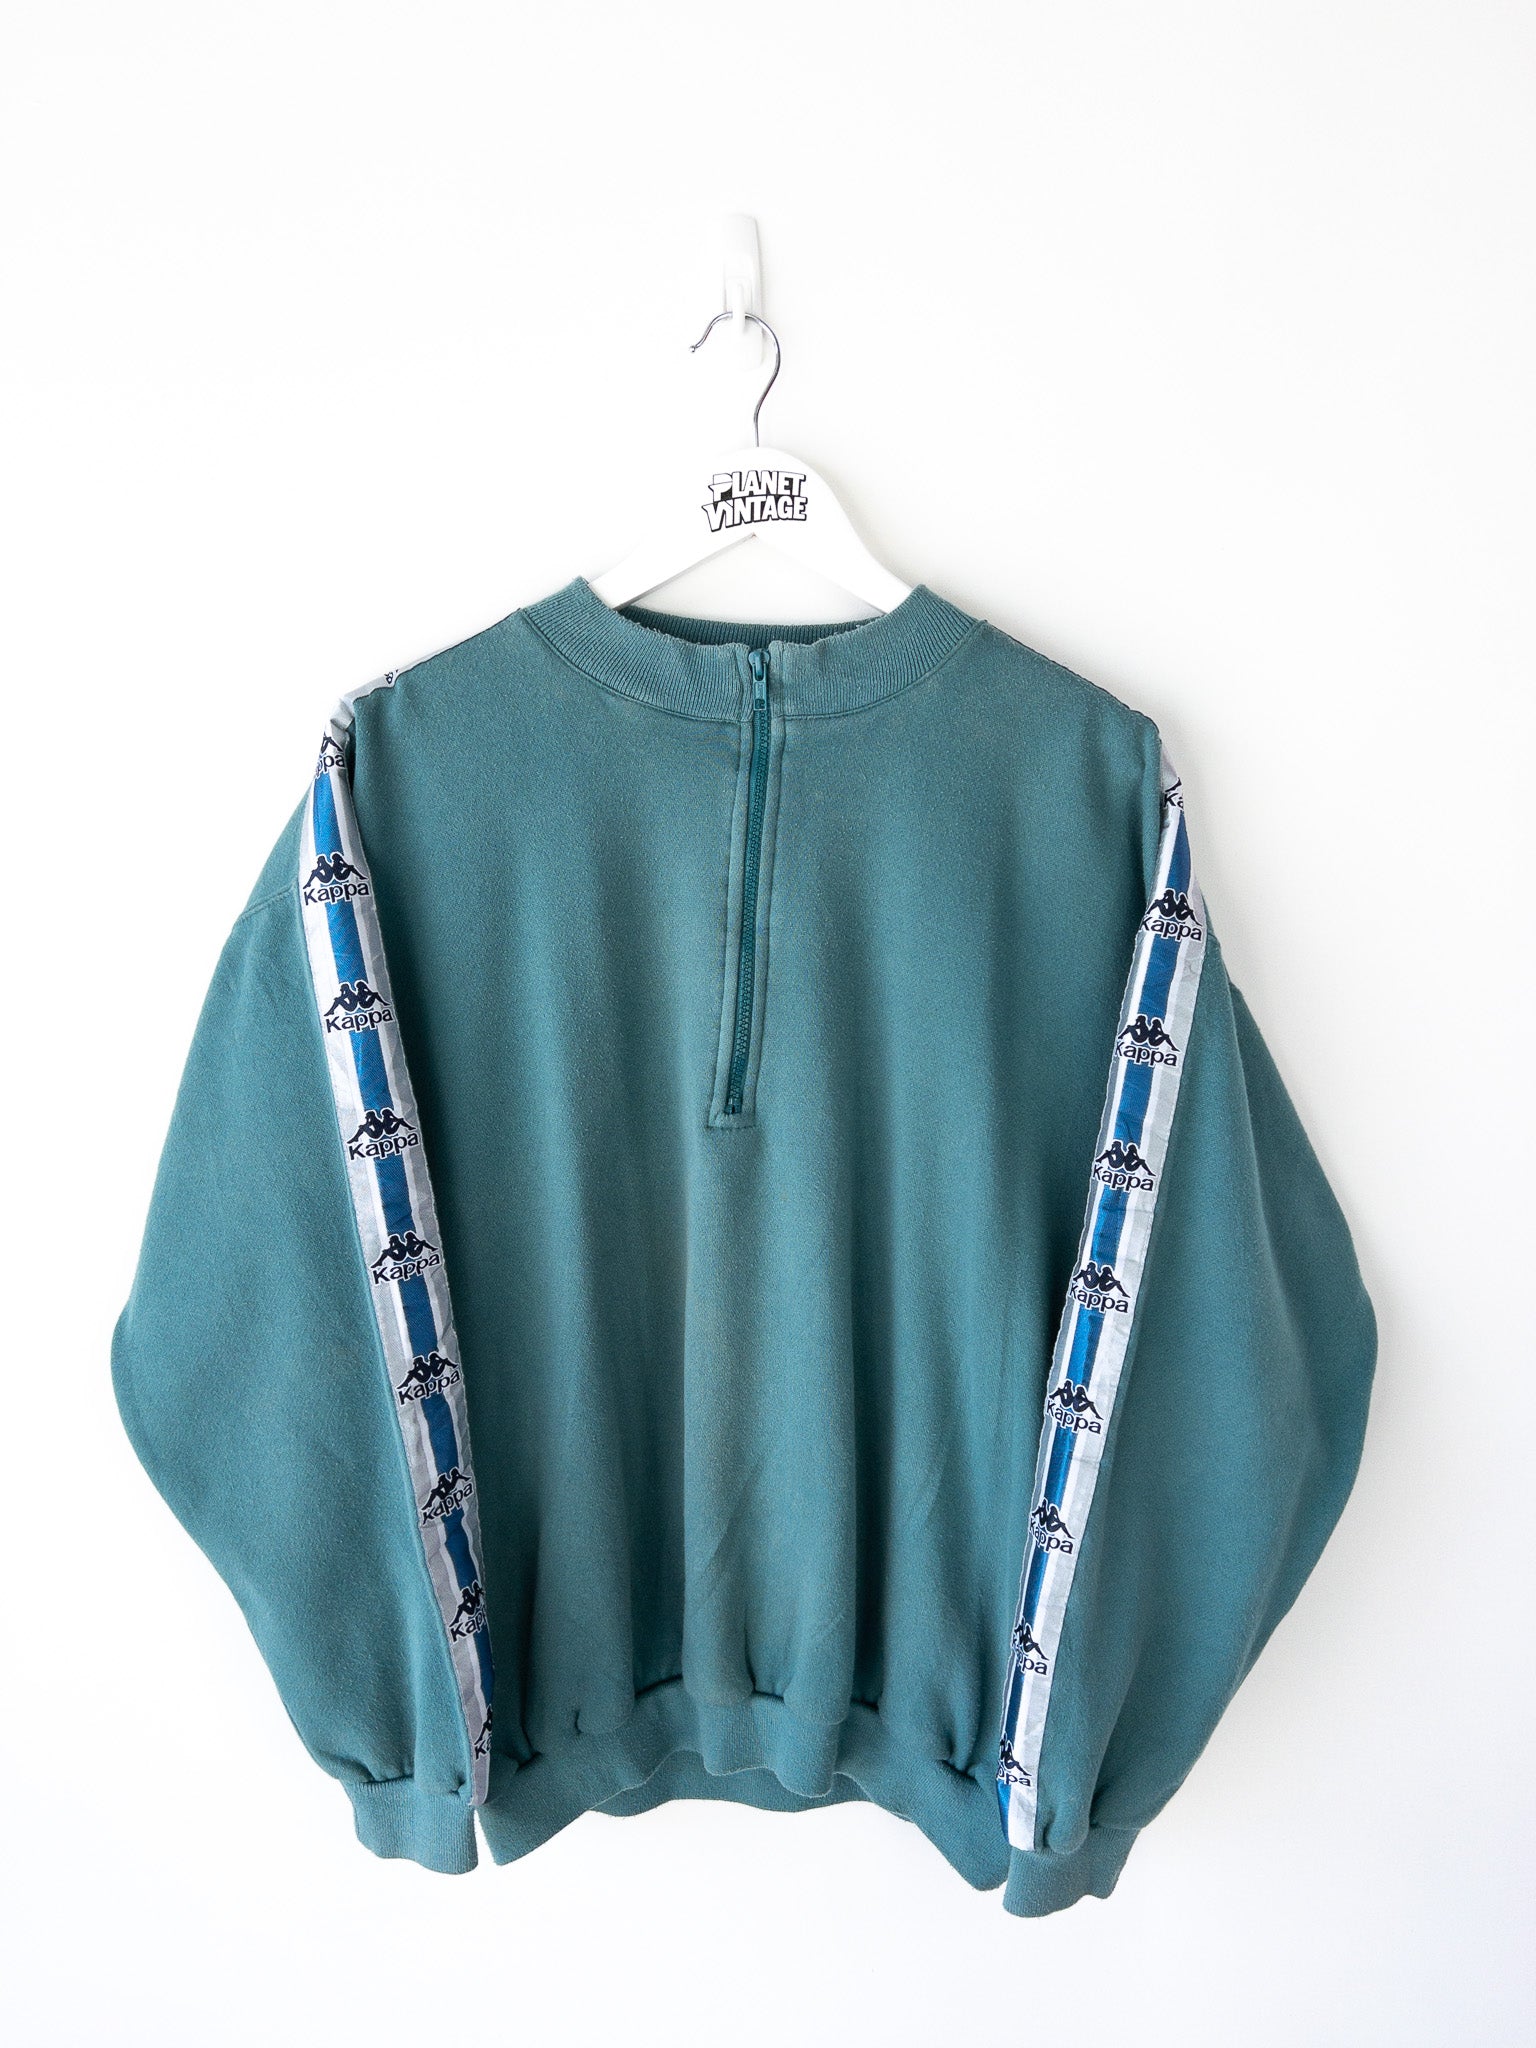 Vintage Kappa Quarter Zip Sweatshirt (L)